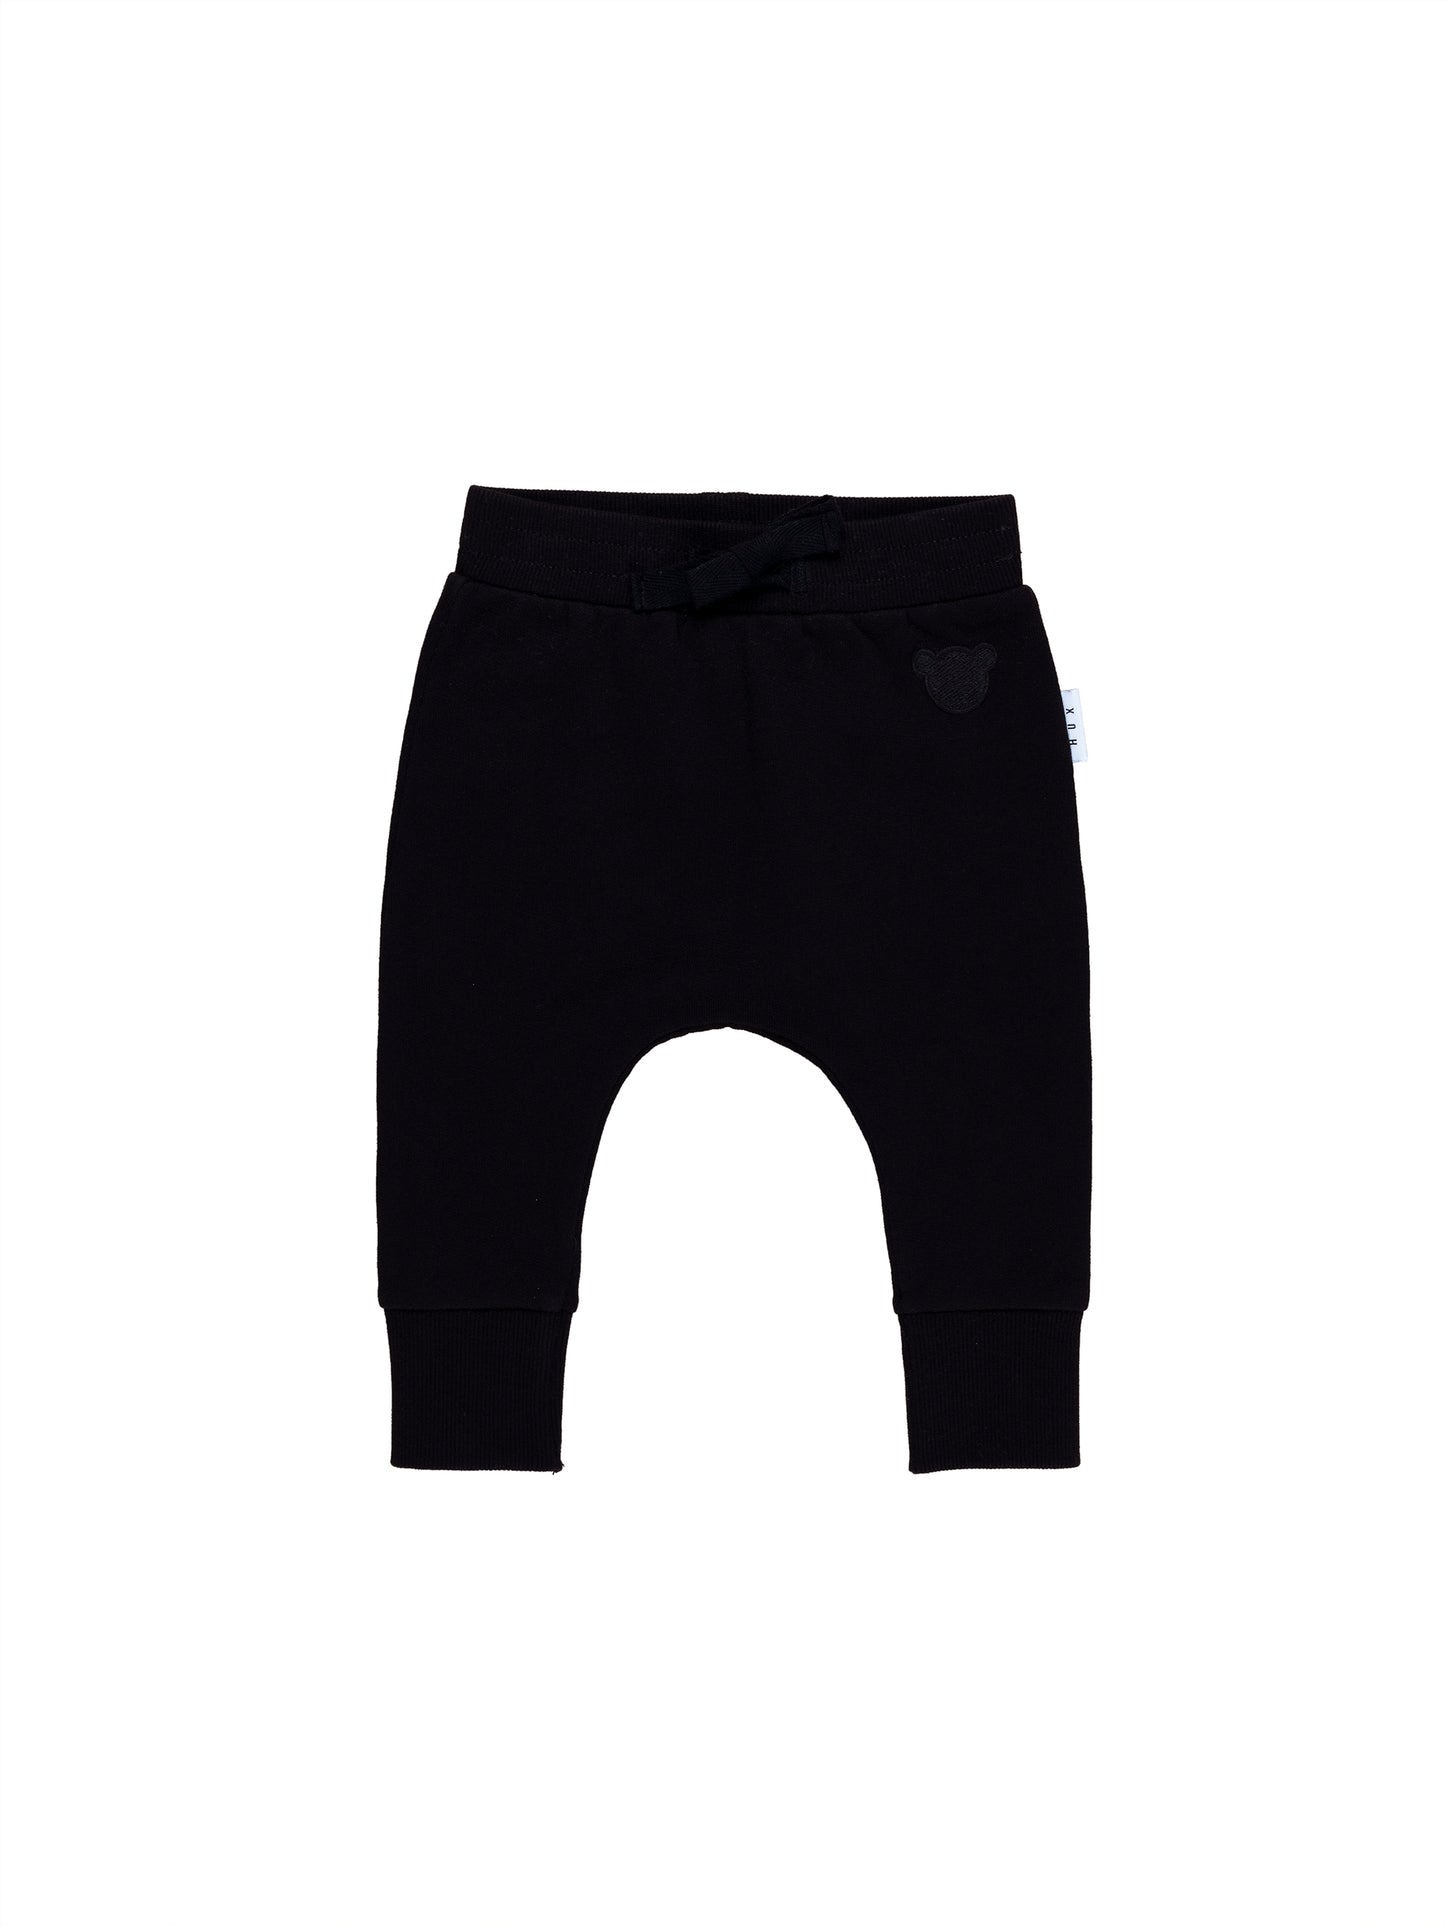 Huxbaby Black Fleece Drop Crotch Pants